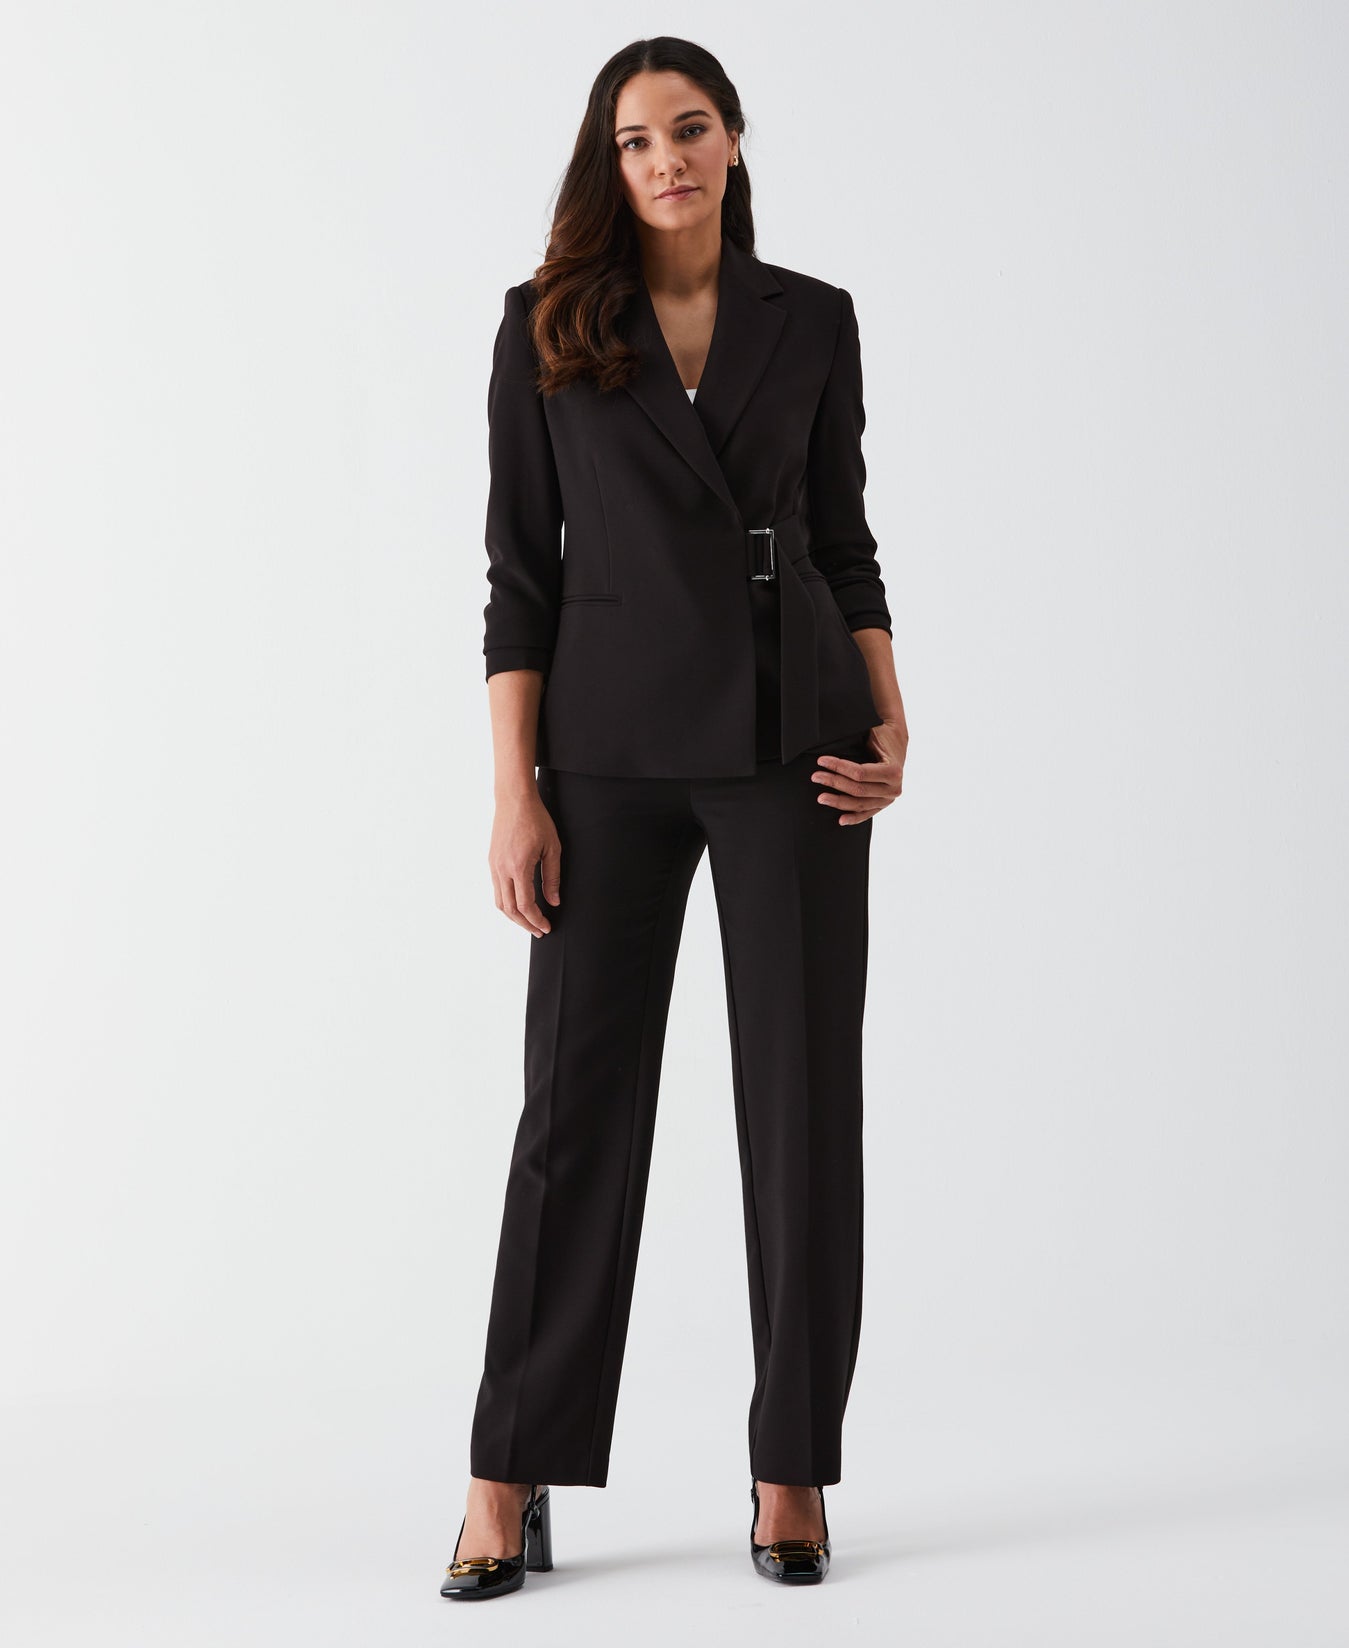 Rafaella Business Pant Suits for Women